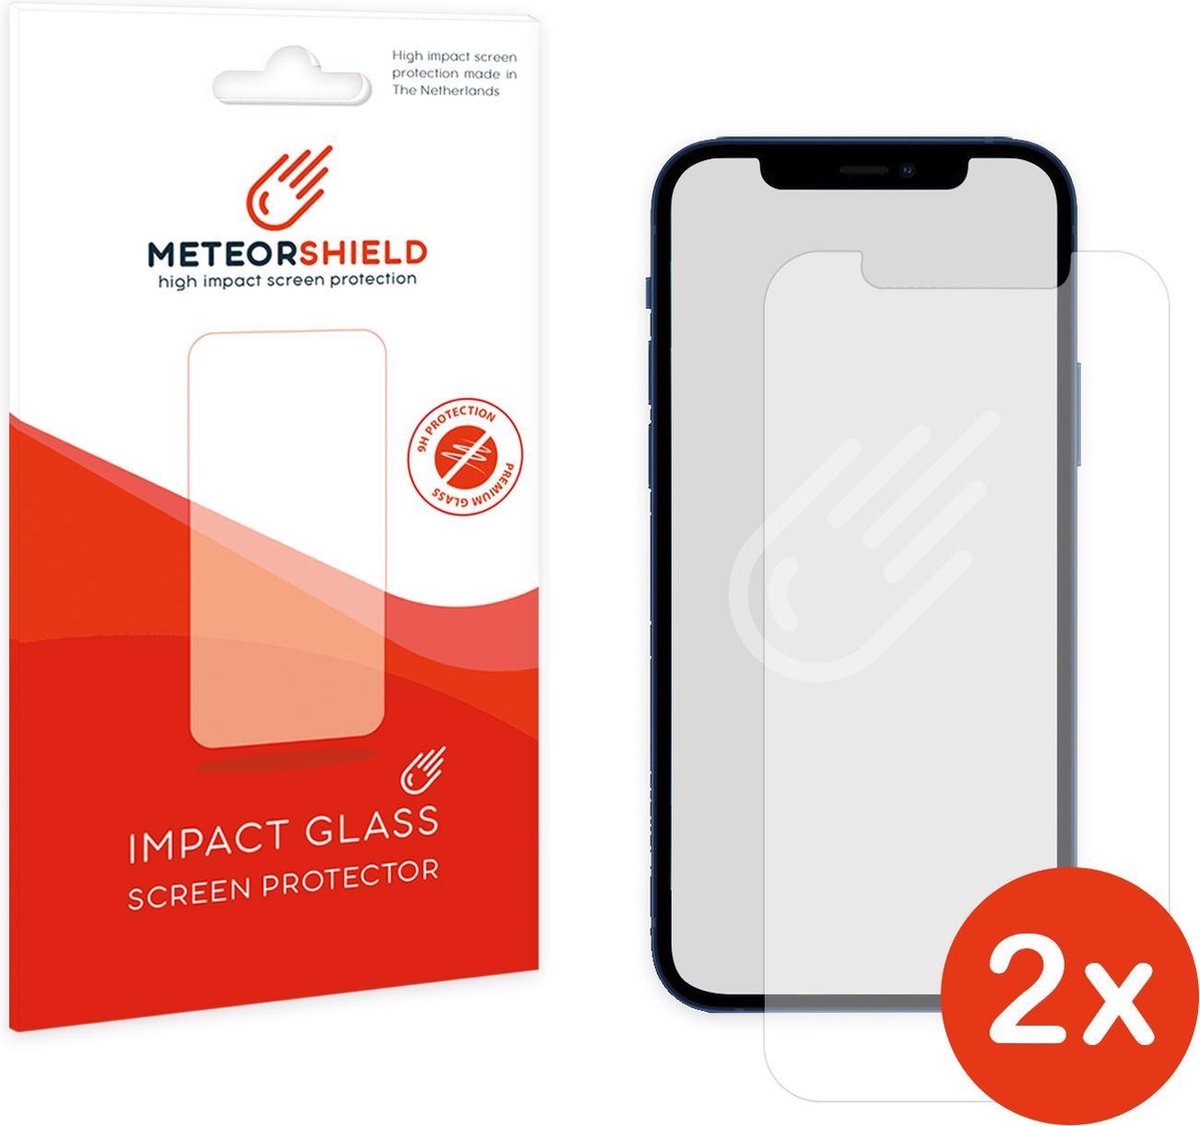 2 stuks: Meteorshield iPhone 12 Mini screenprotector - Ultra clear impact glass